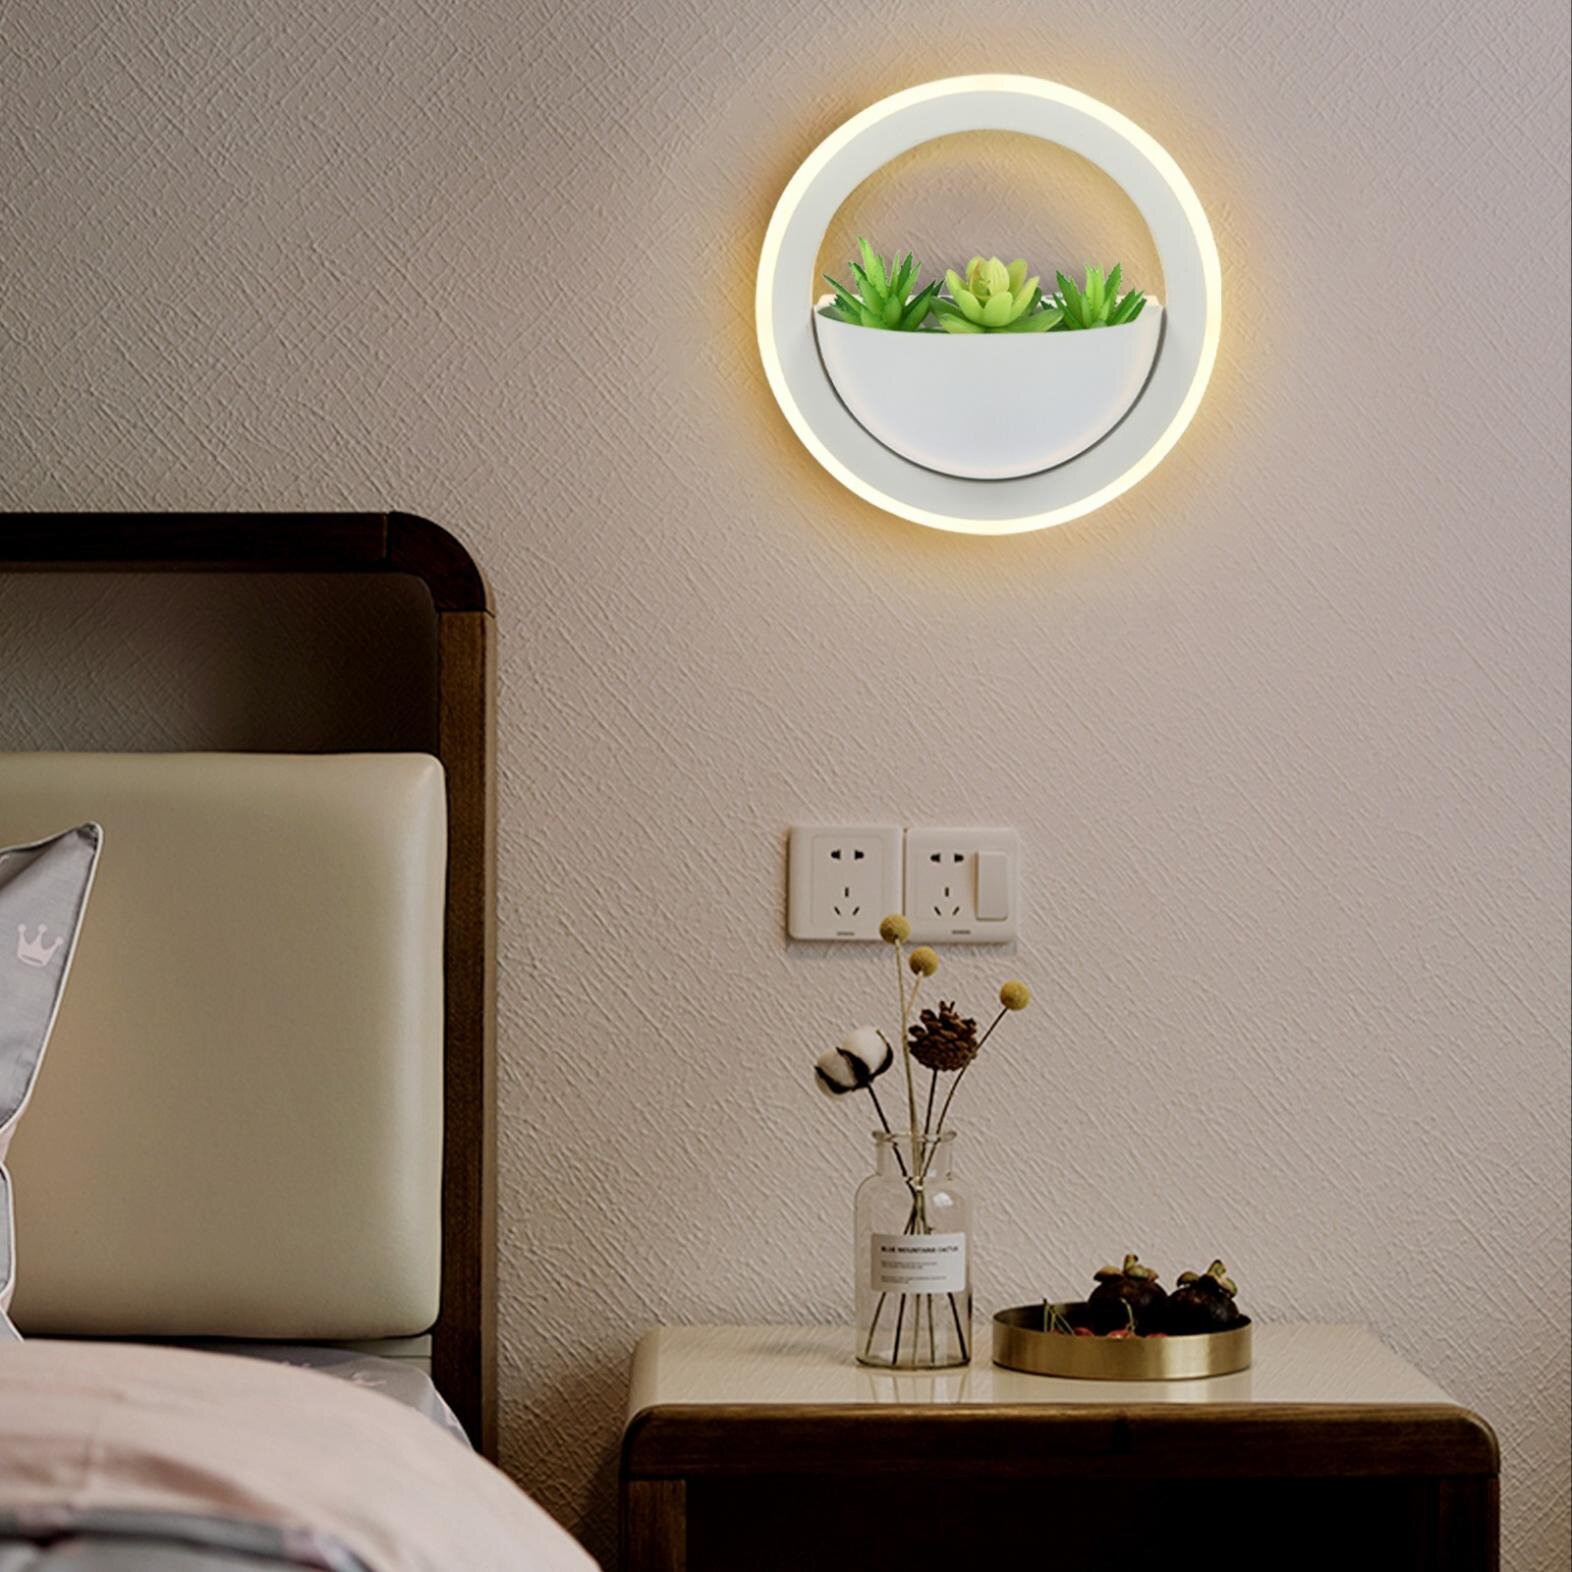 Details about   Wall Lamp Indoor Decor Light Sconce Lighting Fixture For Bedroom Bedside SALE US 